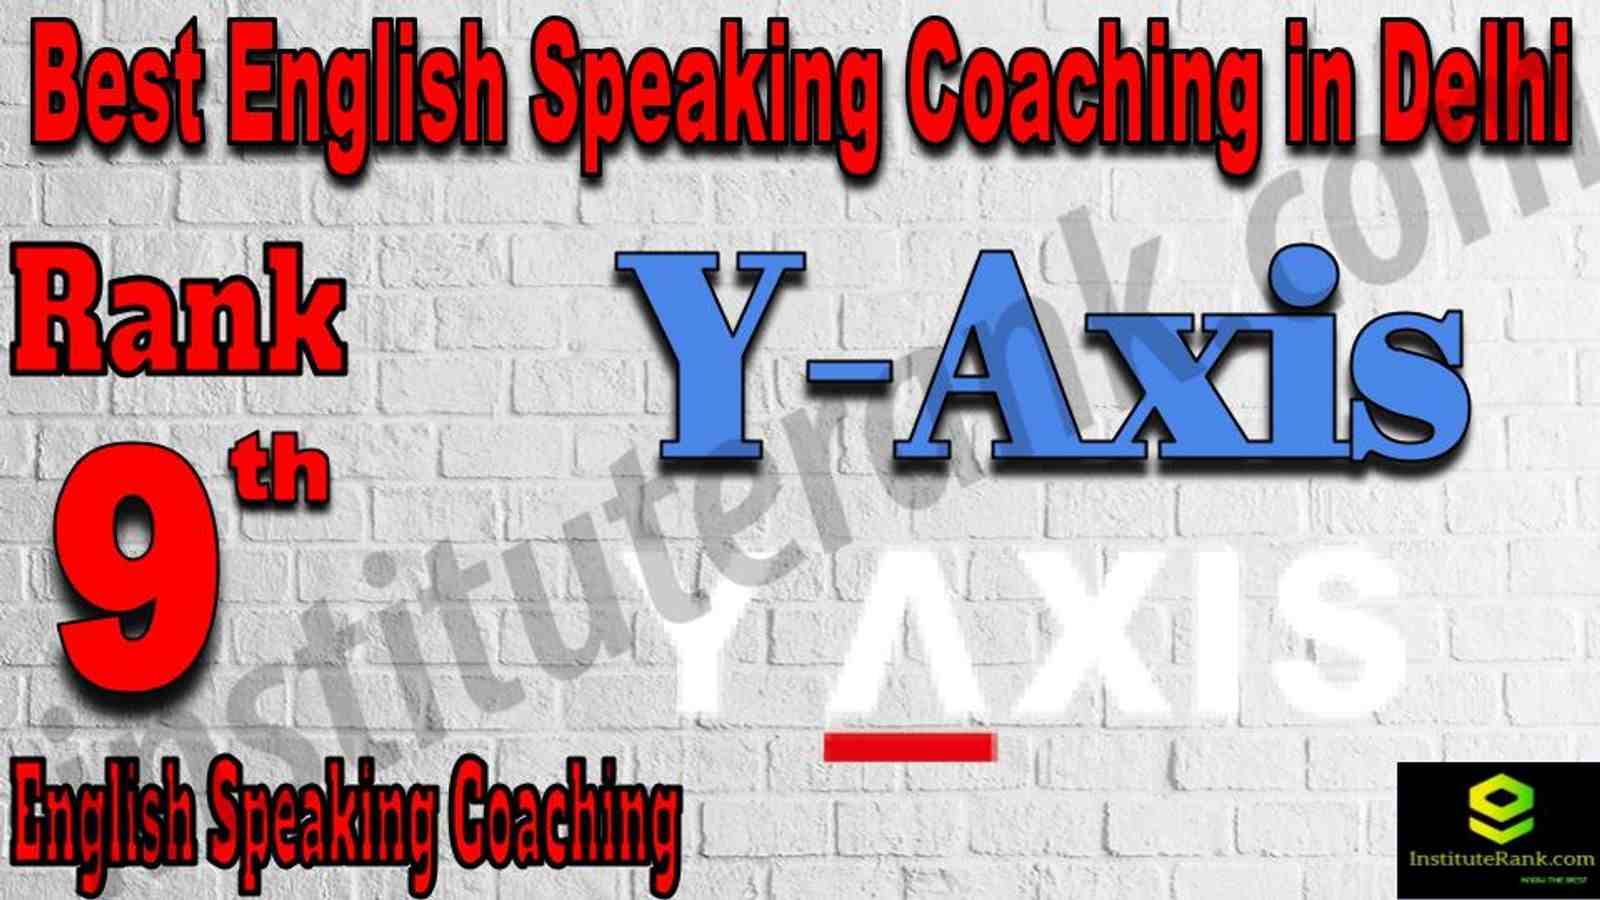 Rank 9 Best English Speaking Coaching in Delhi